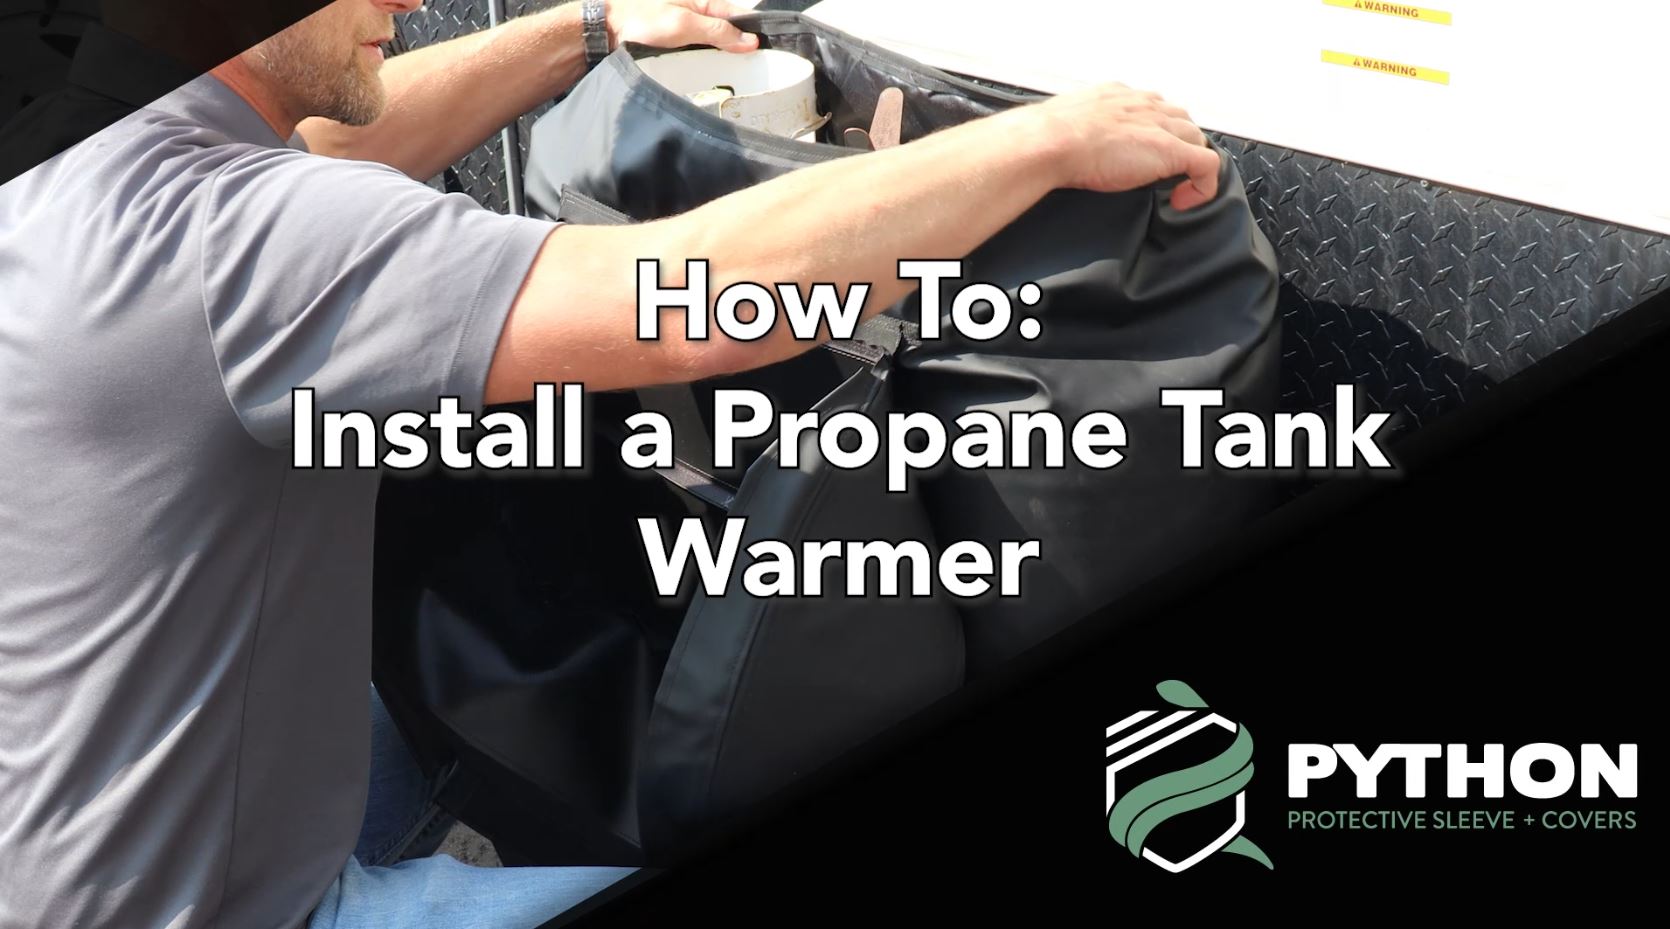 Propane tank warmer installation instructions